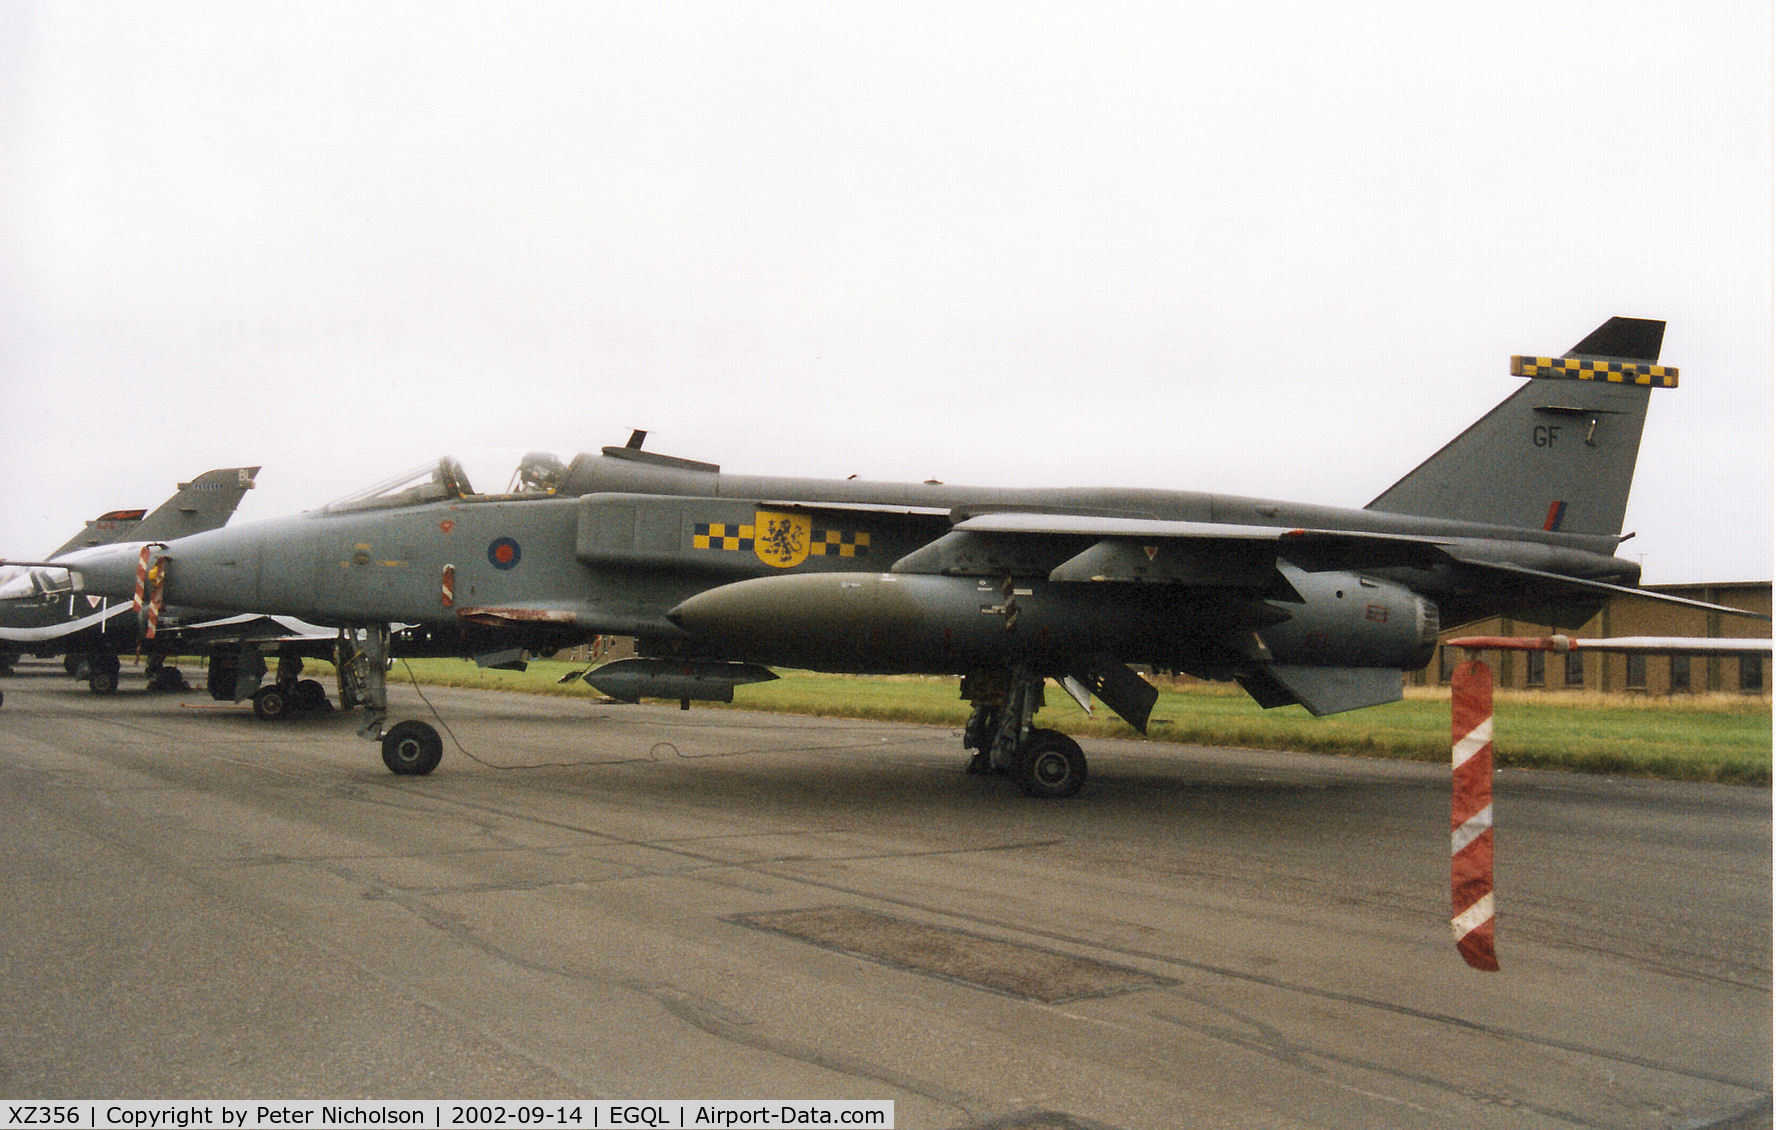 XZ356, 1976 Sepecat Jaguar GR.3A C/N S.123, Jaguar GR.3A, callsign COH 02, of 54 Squadron at RAF Coltishall on display at the 2002 RAF Leuchars Airshow.